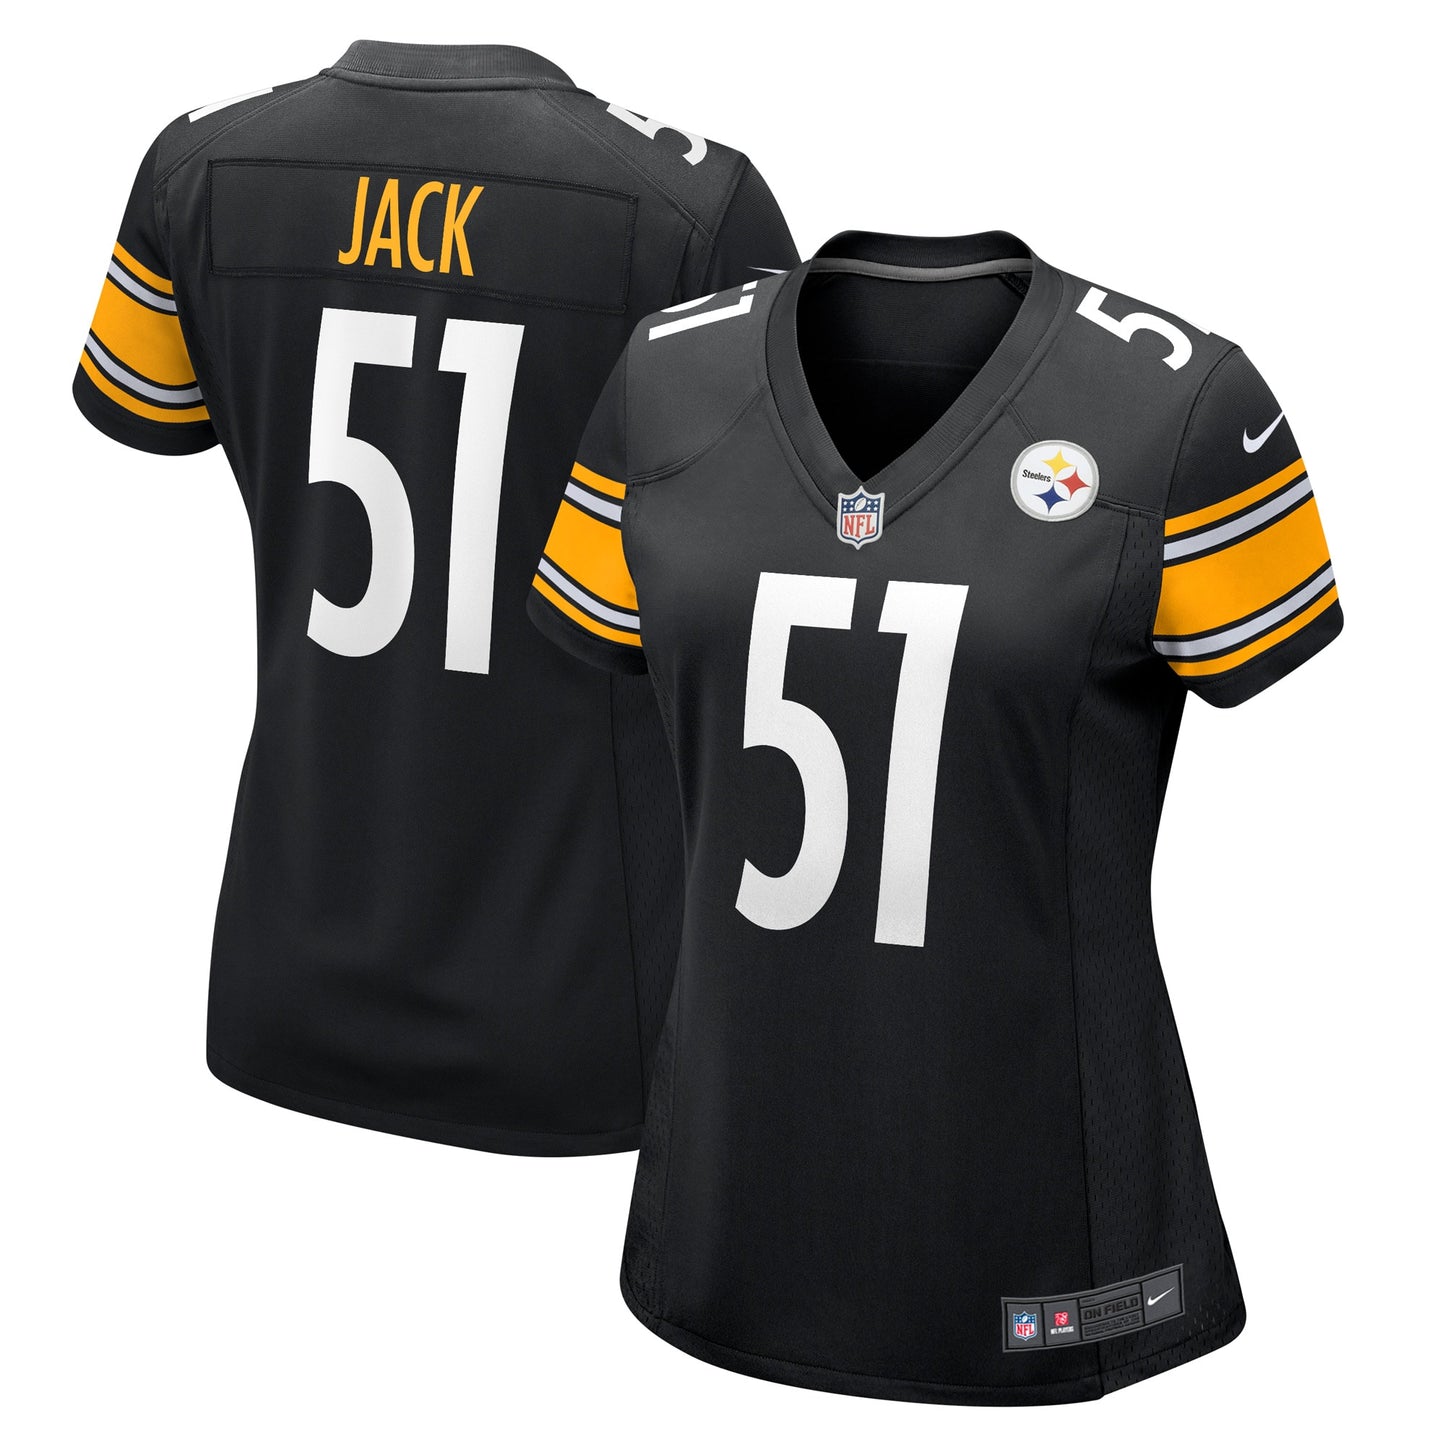 Myles Jack Pittsburgh Steelers Nike Women's Game Player Jersey - Black